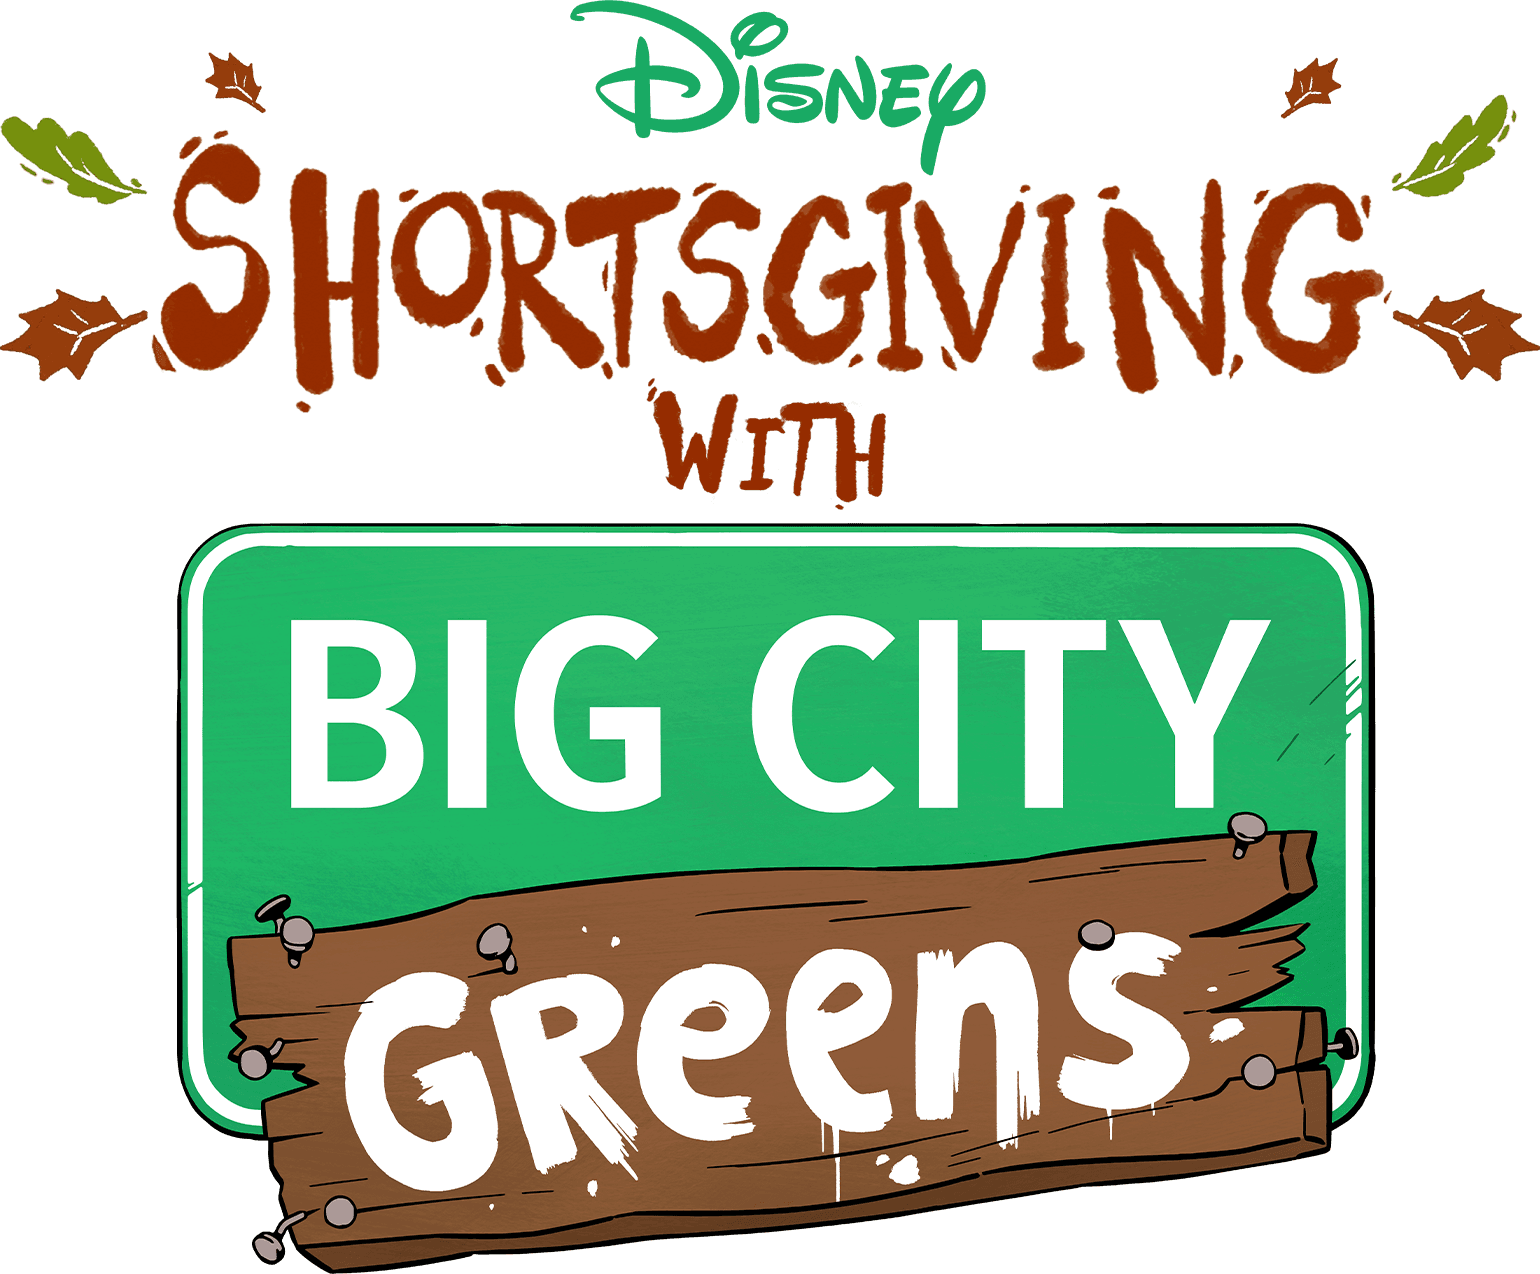 Shortsgiving with Big City Greens logo